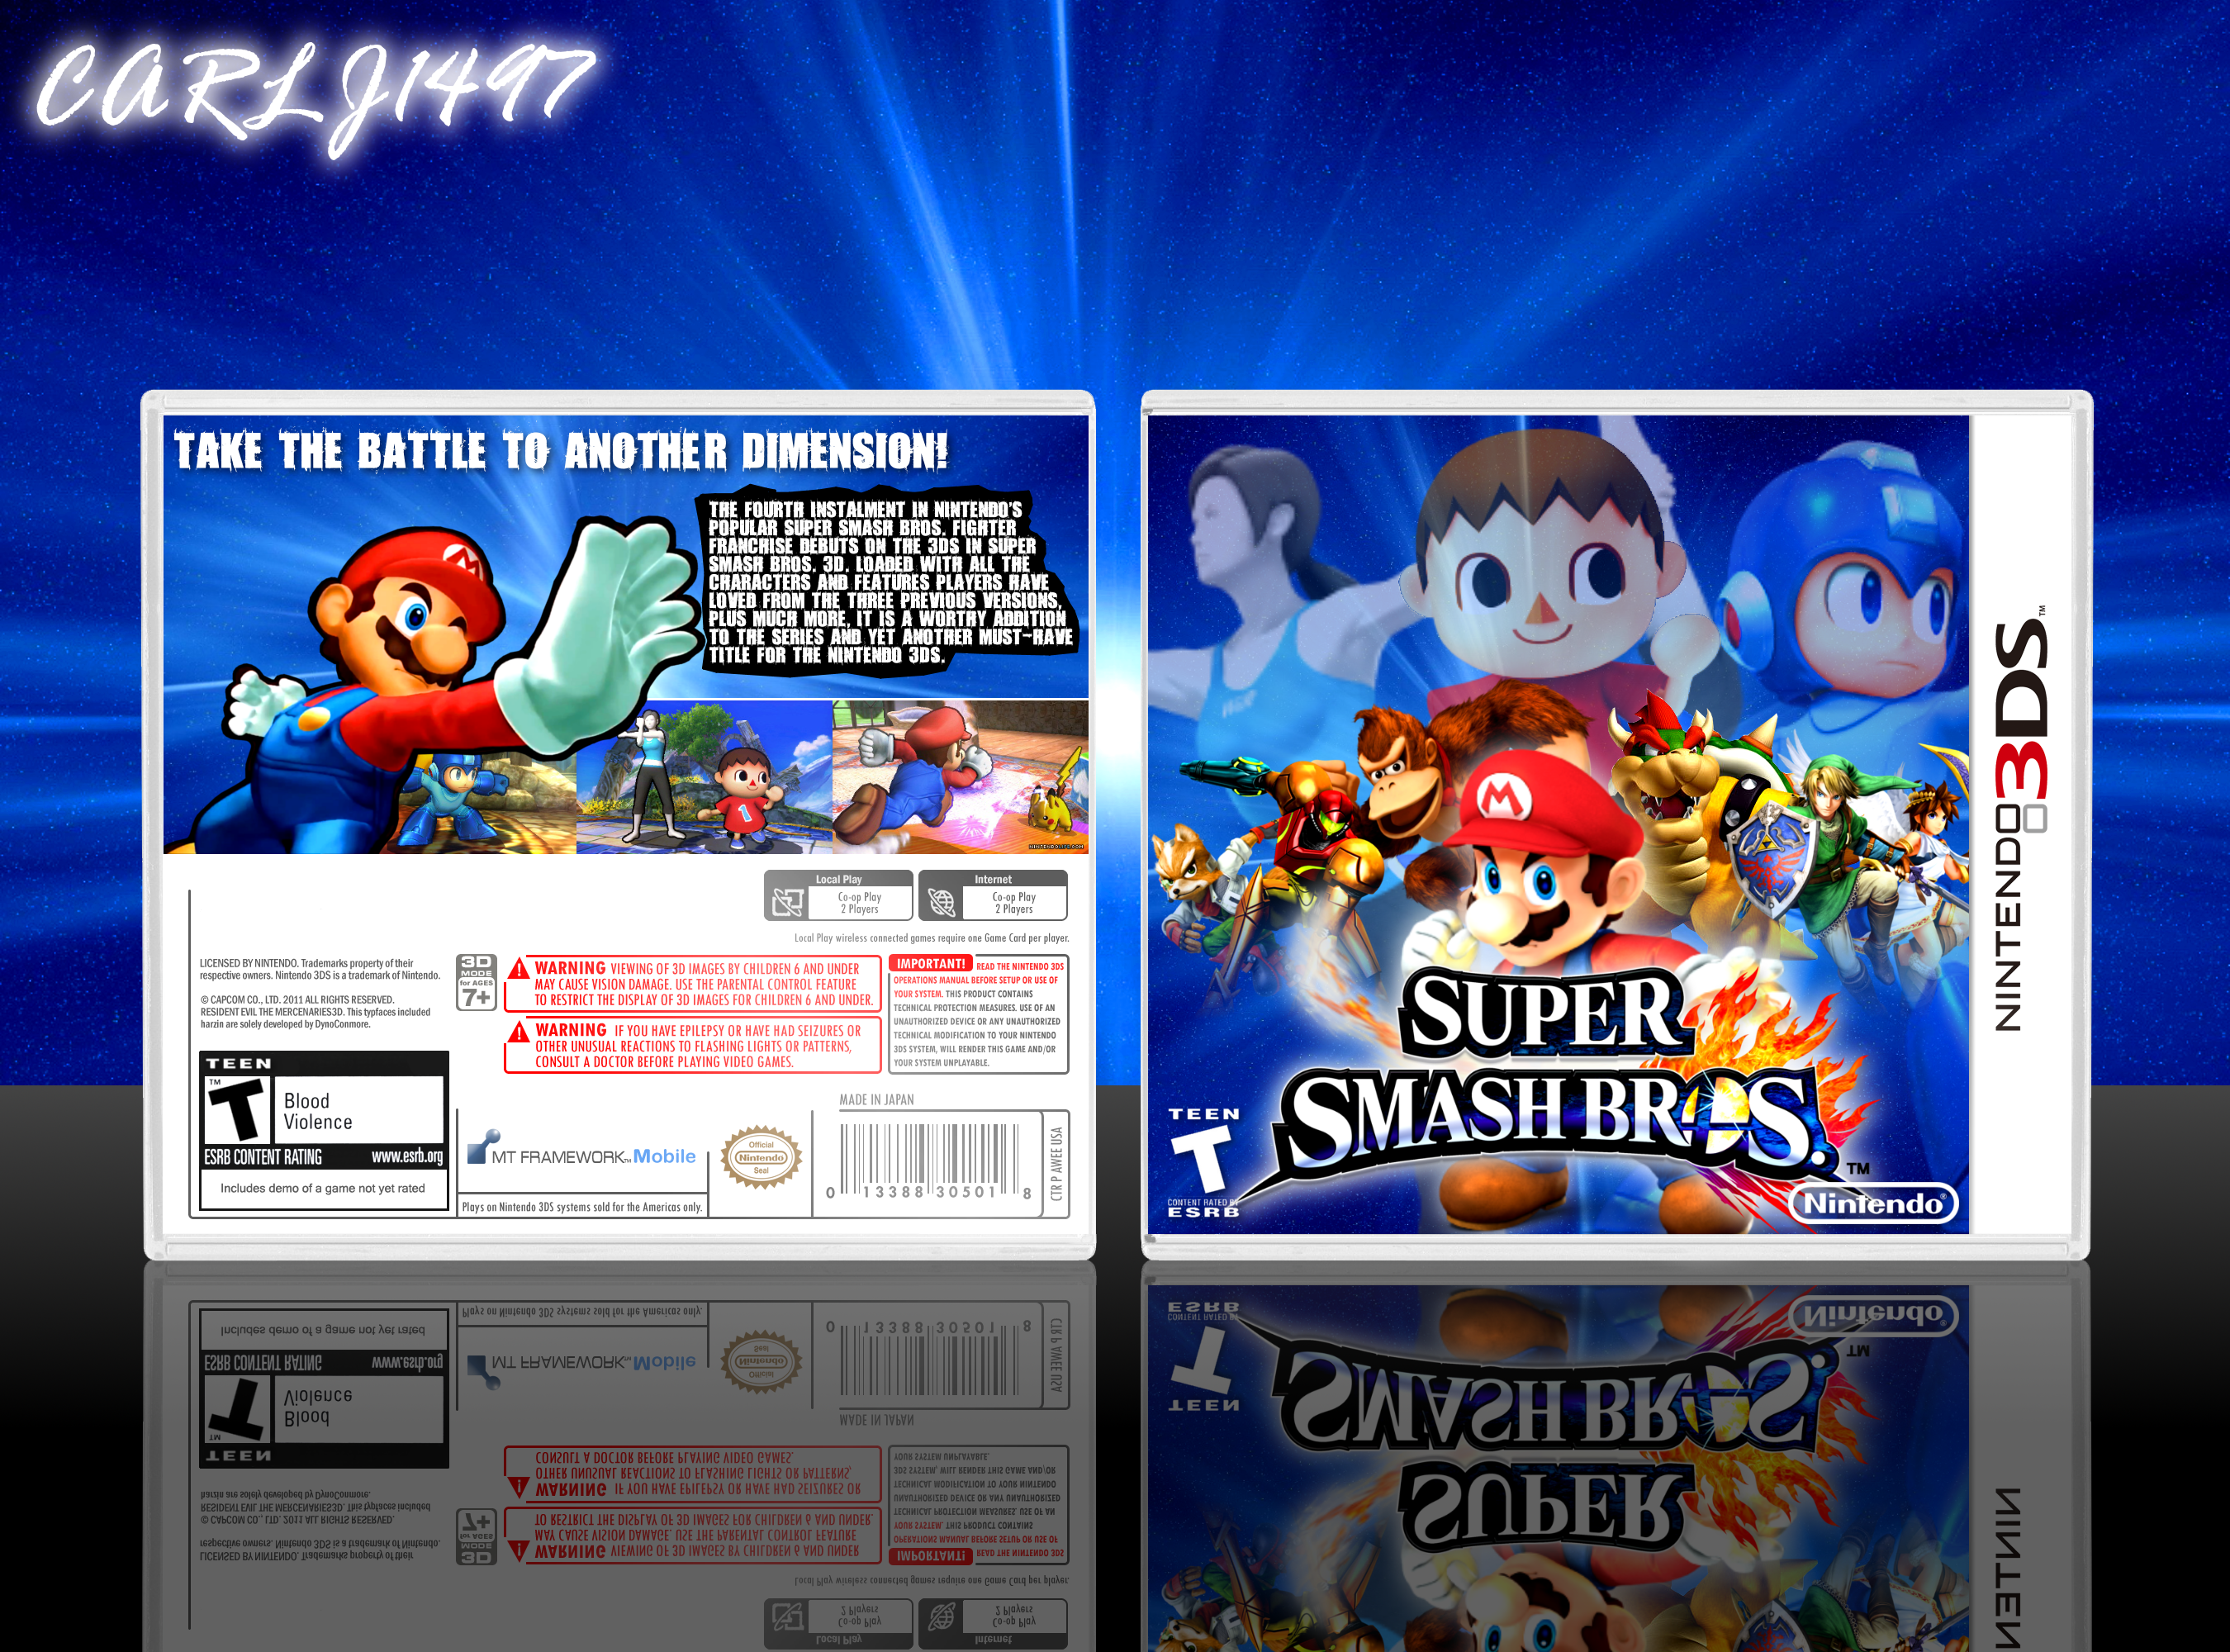 Super Smash Bros. 3DS box cover